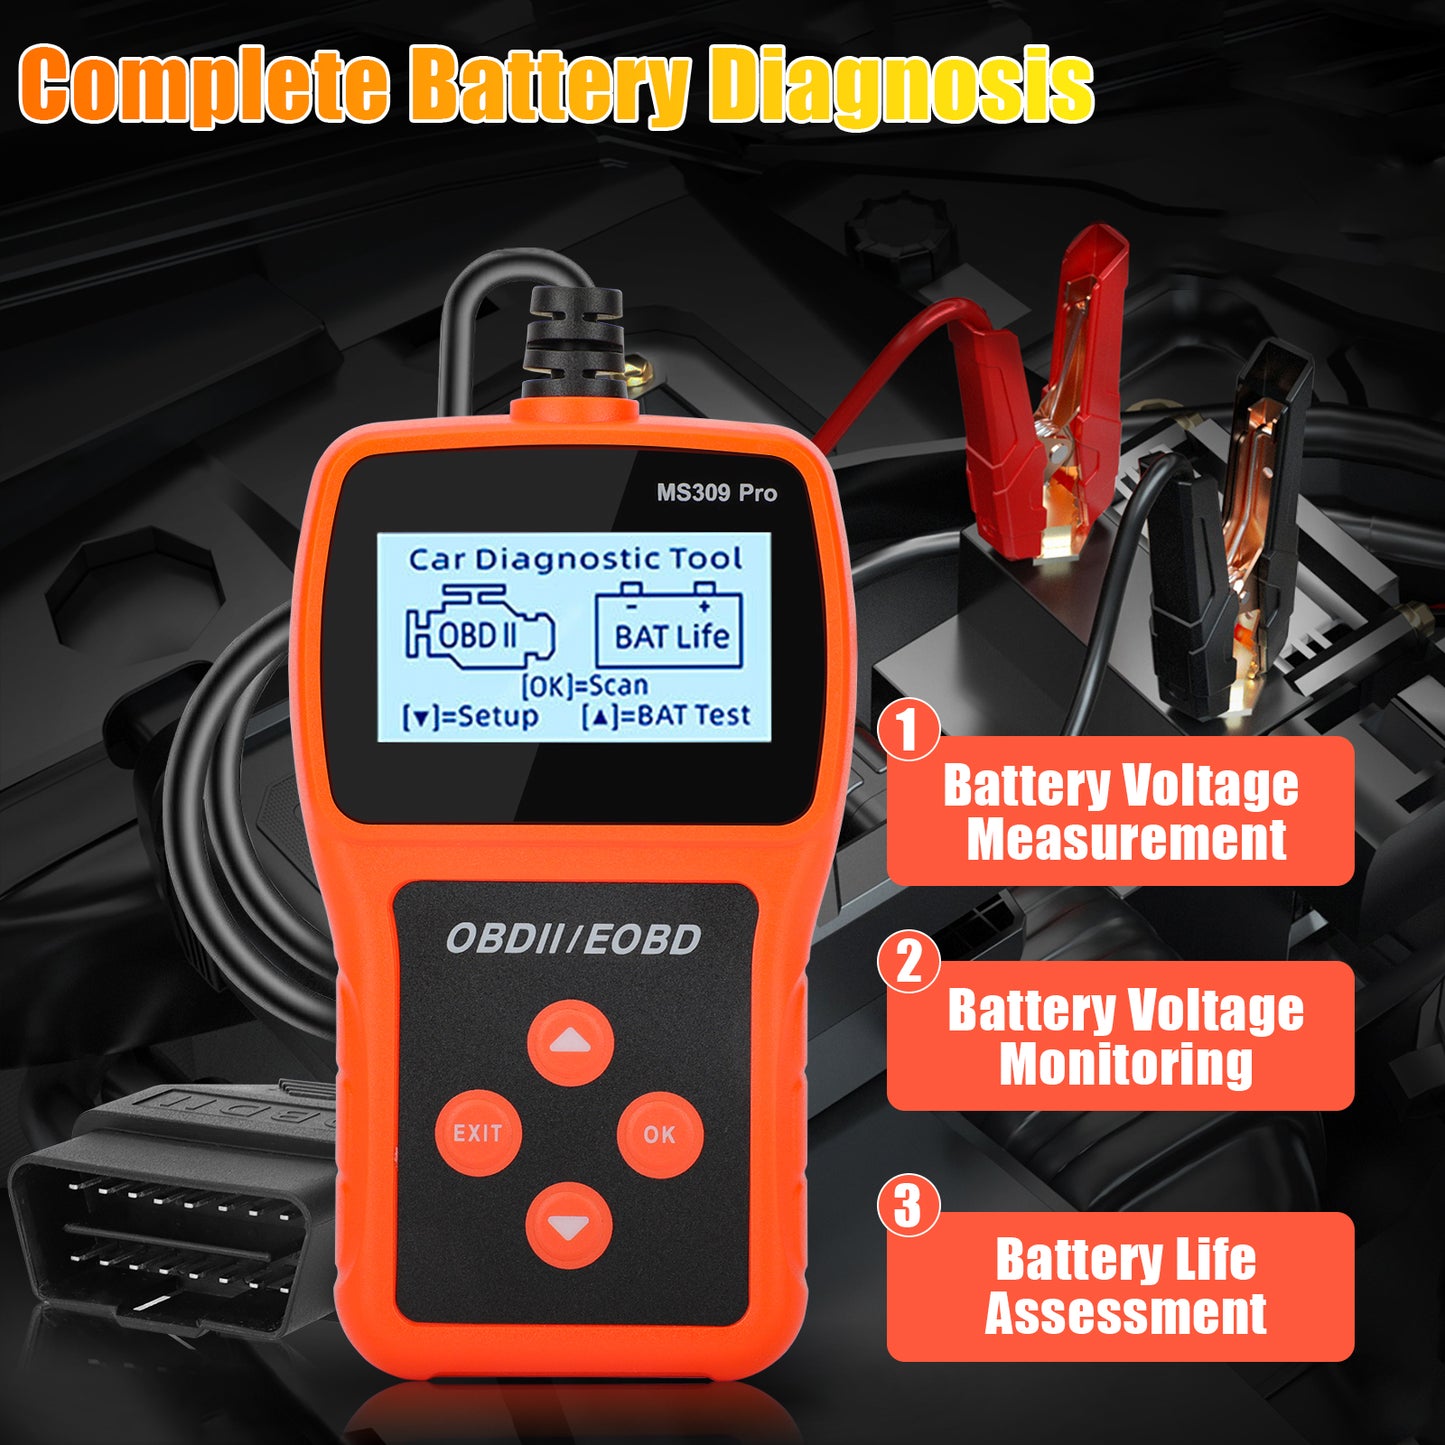 Car OBD2 Diagnostic Tool - Scanner Universal O-B-D-II Code Reader Car Automotive Check Engine Light Error Analyzer Auto CAN Vehicle Diagnostic Scan Tool